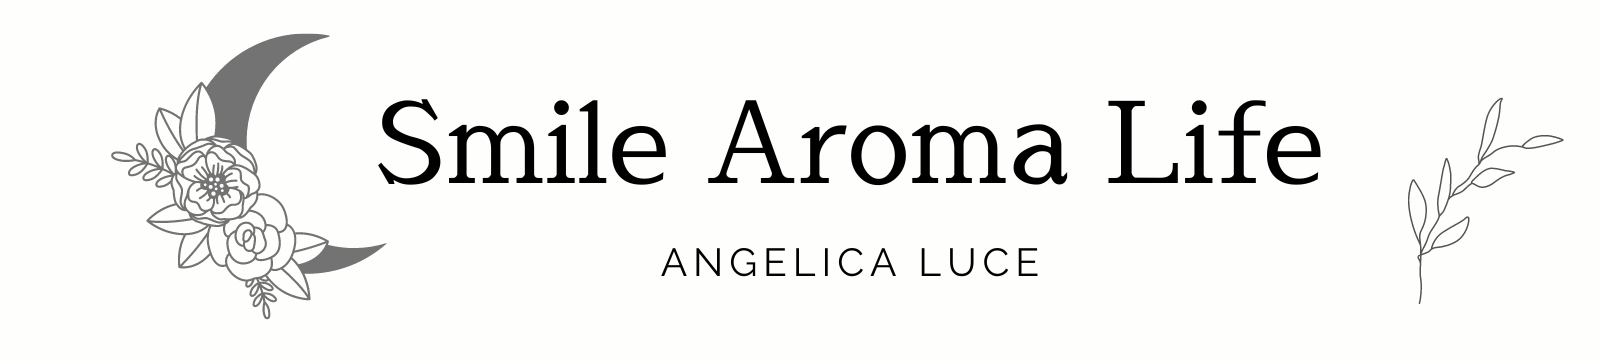 Angelica Luce Blog